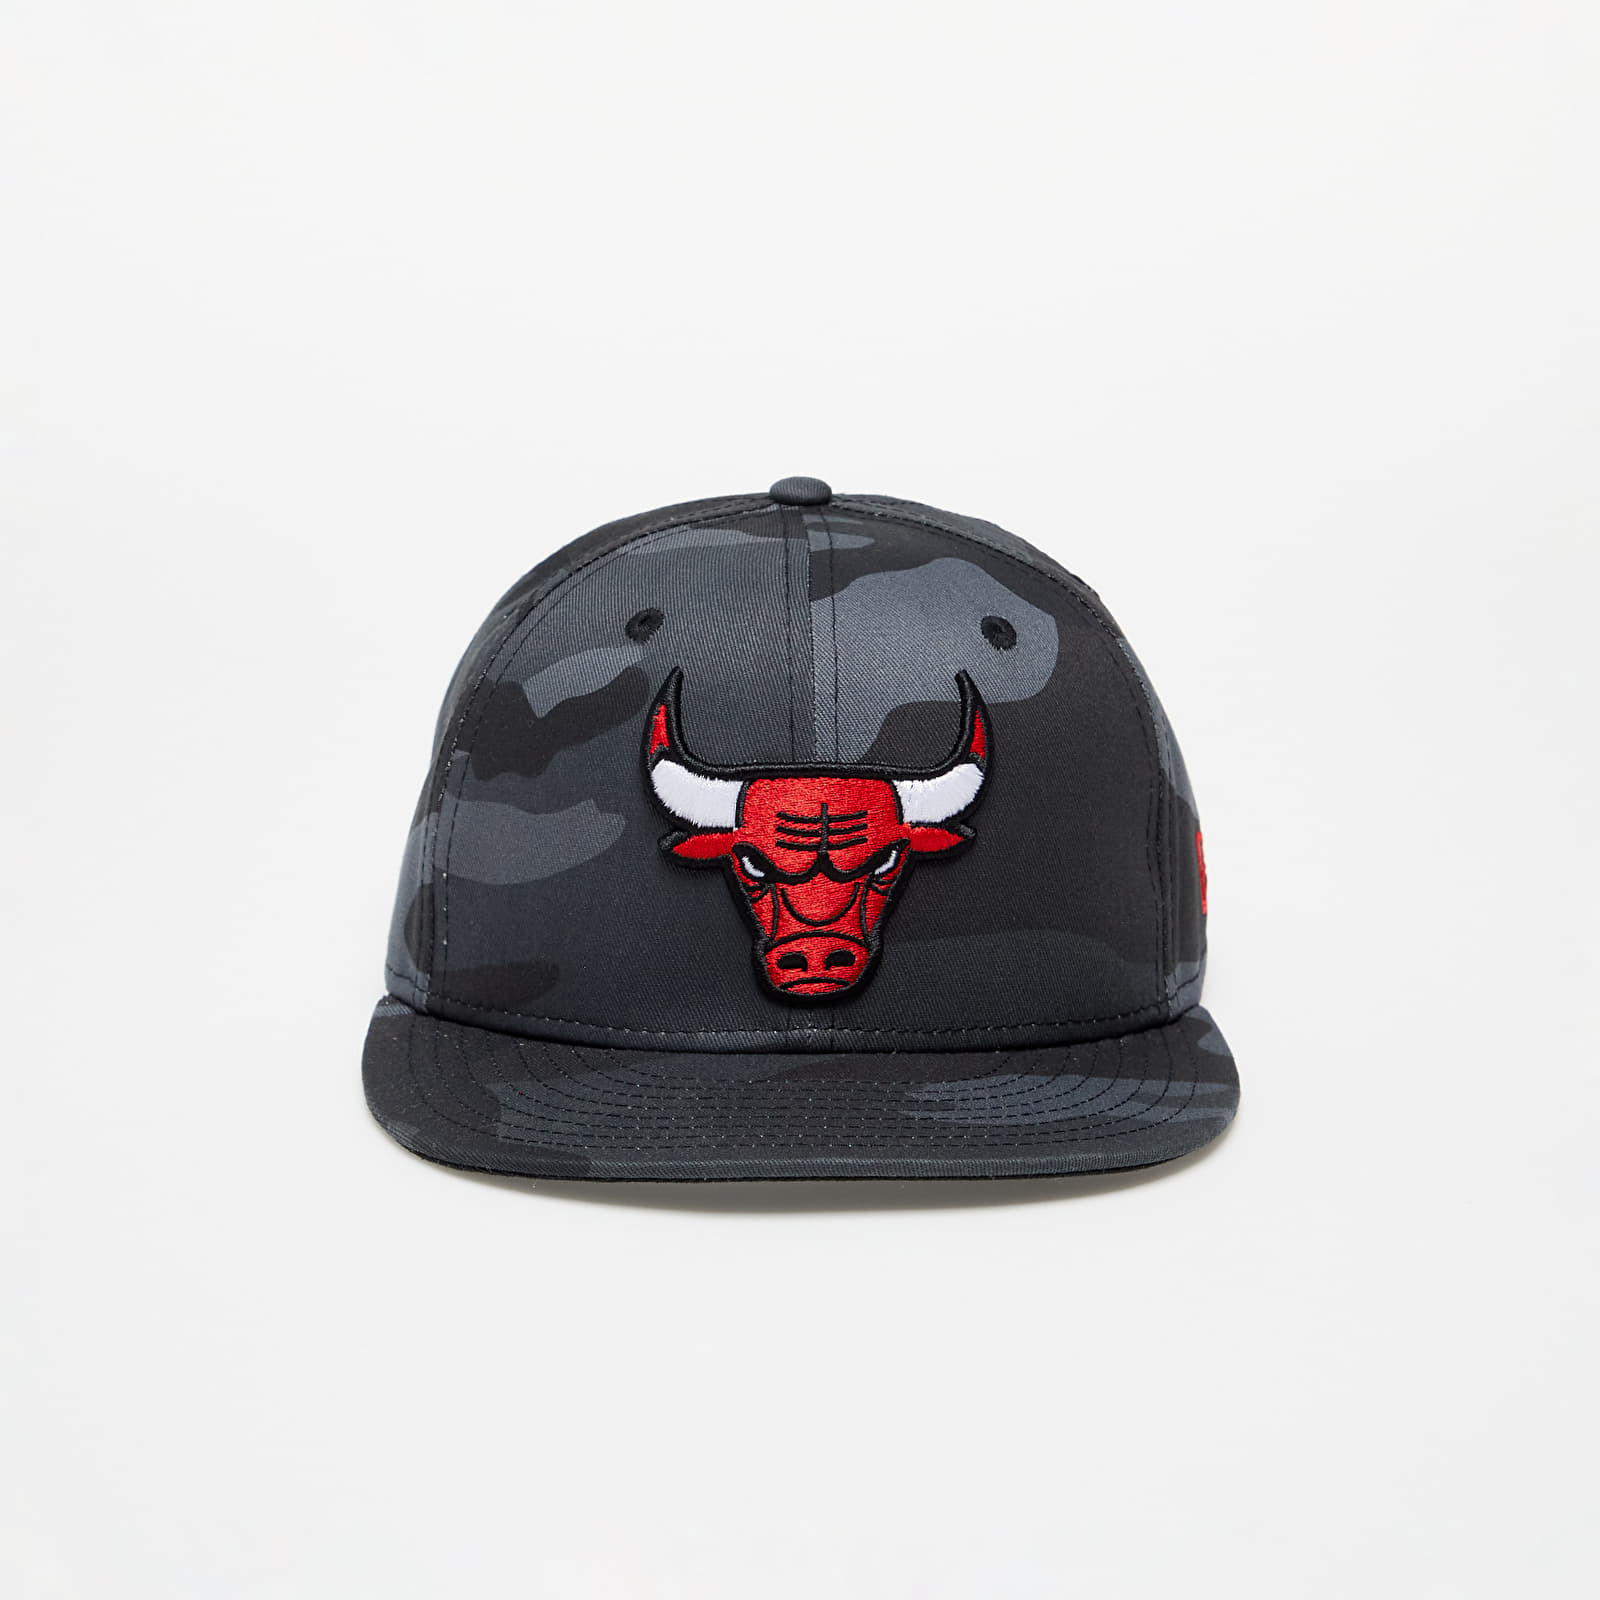 New Era Chicago Bulls Team 9FIFTY Snapback Cap Camo